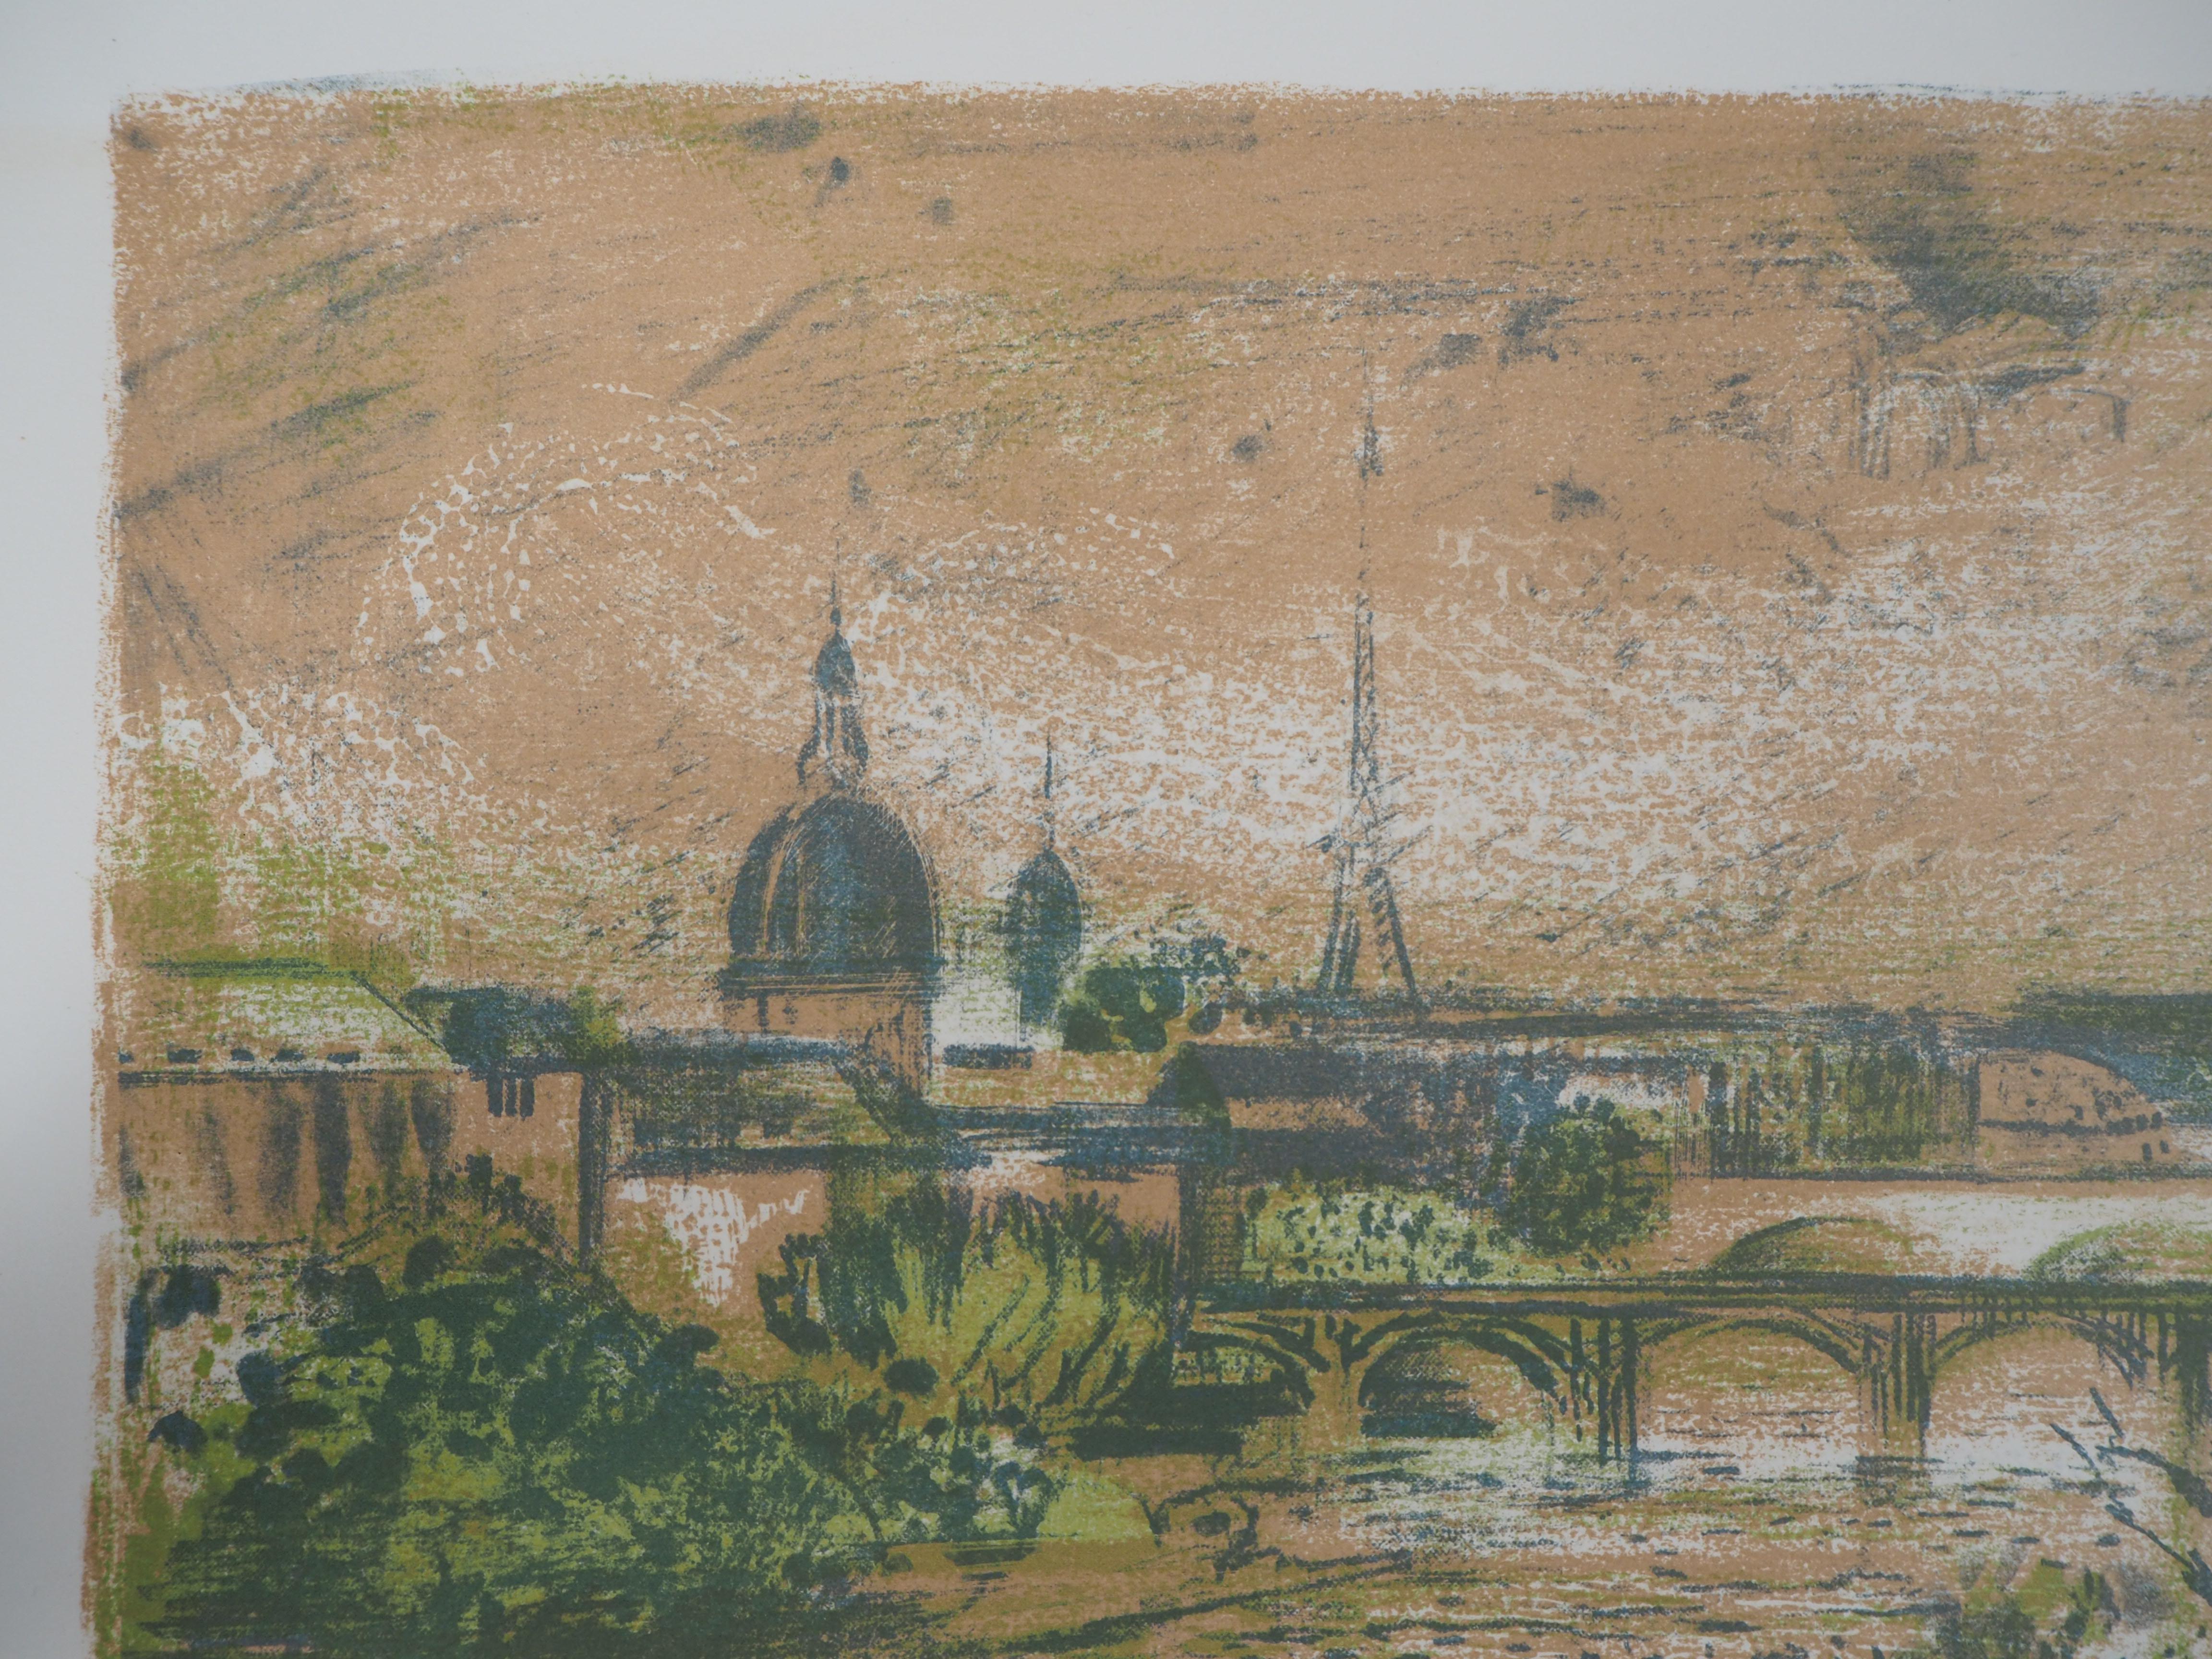 Paris : Seine River - Original lithograph, Handsigned - Post-Impressionist Print by Paul Collomb